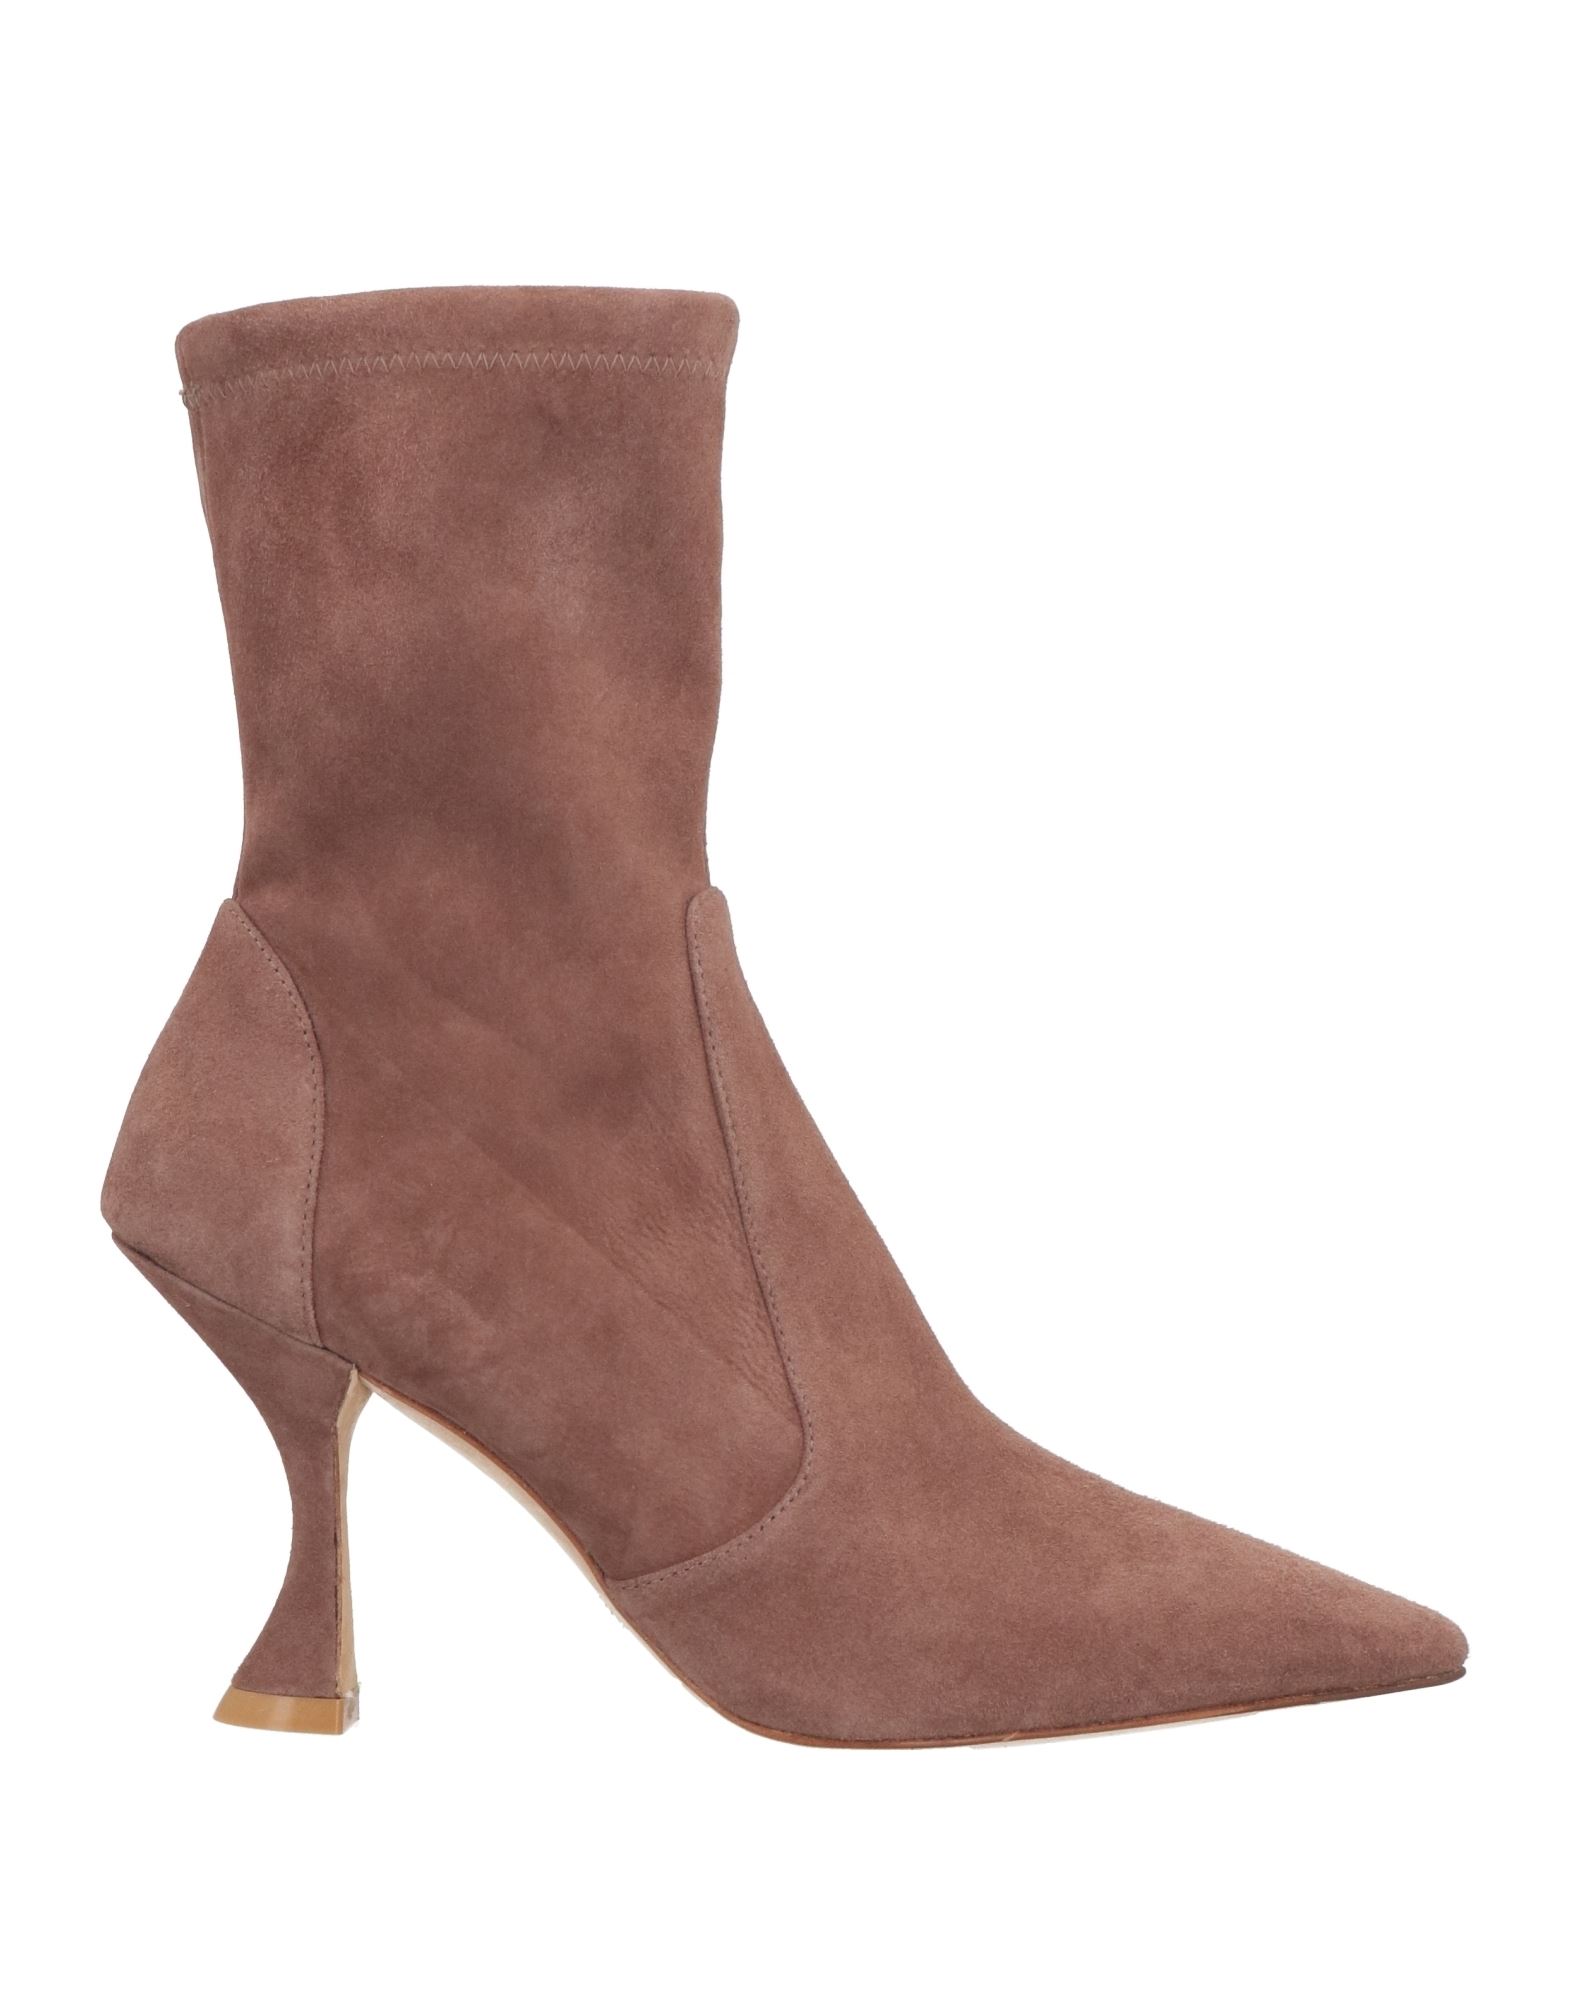 Shop Stuart Weitzman Woman Ankle Boots Brown Size 5.5 Soft Leather